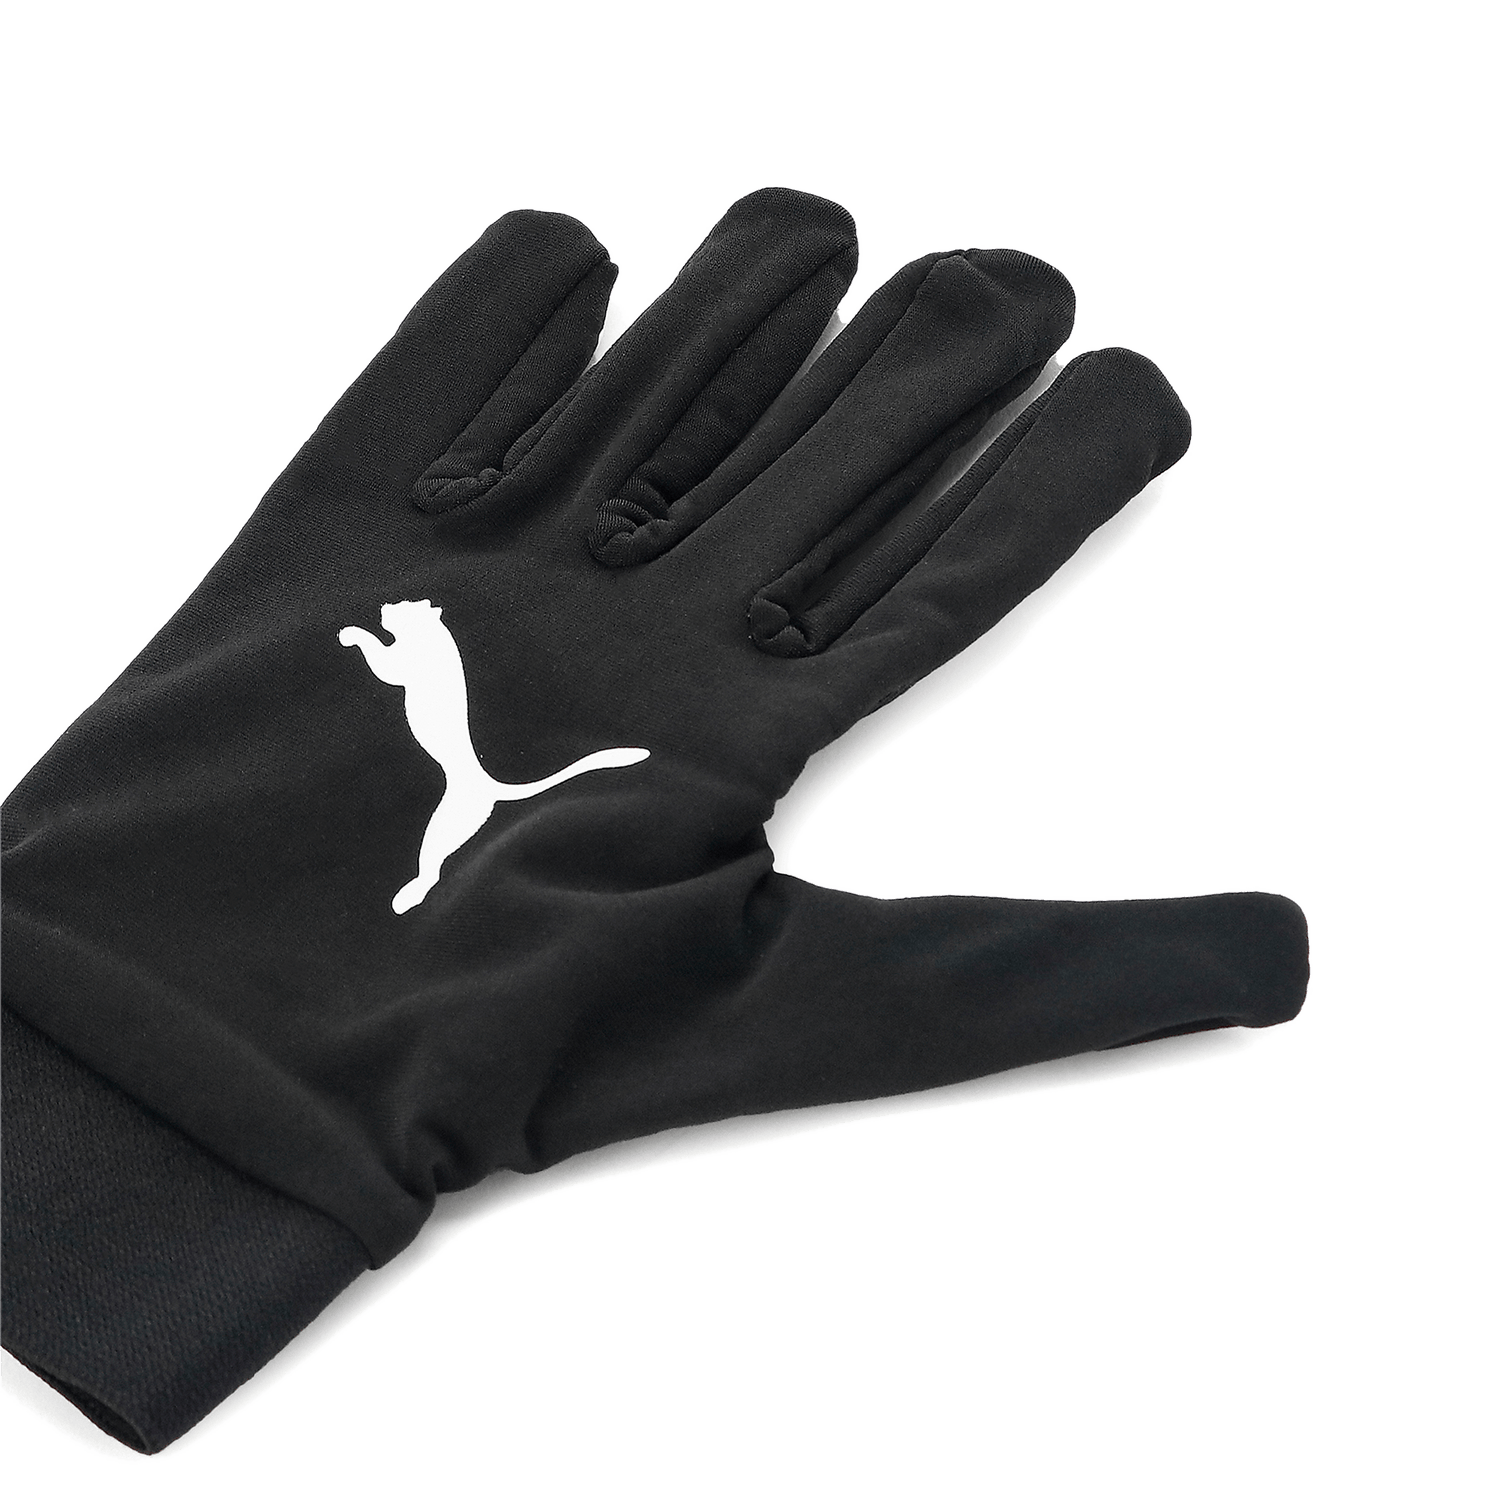 Puma Field Player Glove - Black - White (Single - Outer)